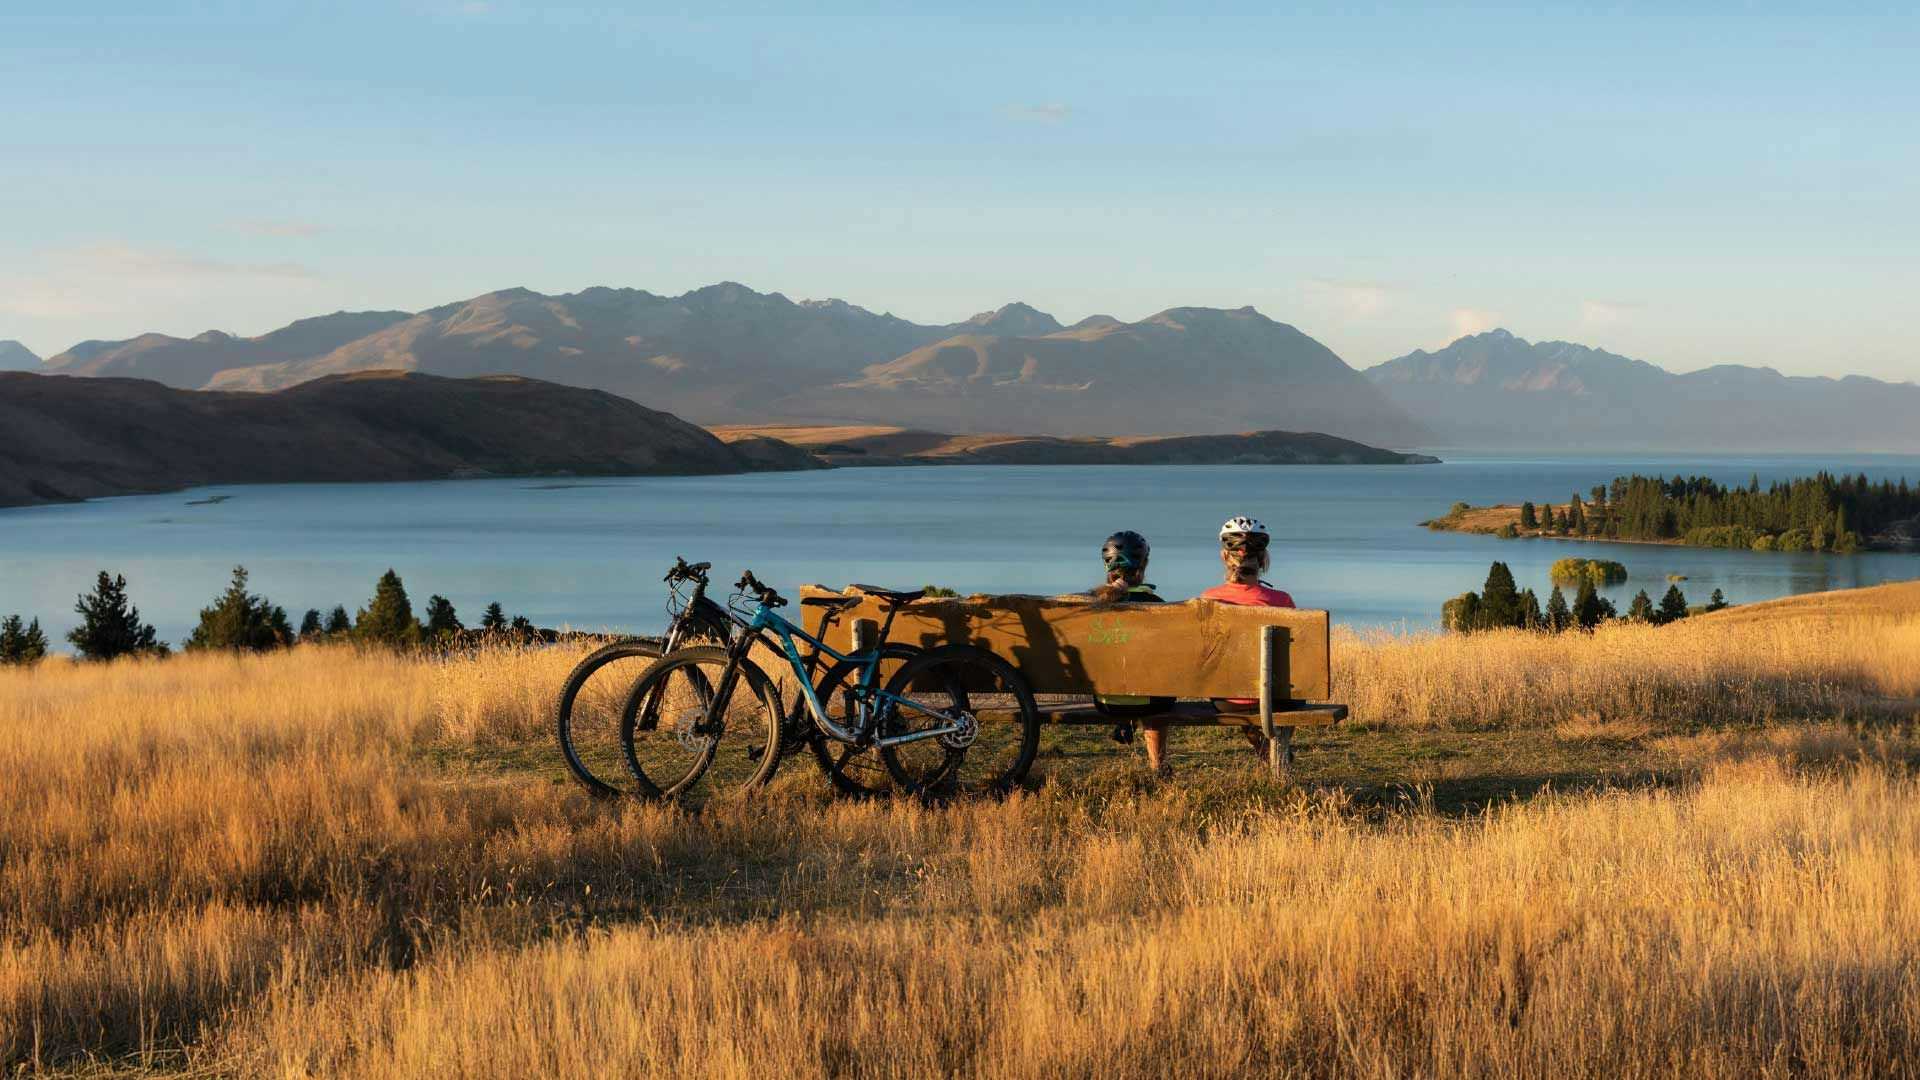 Two cyclists admire the view at Lake Tekapo